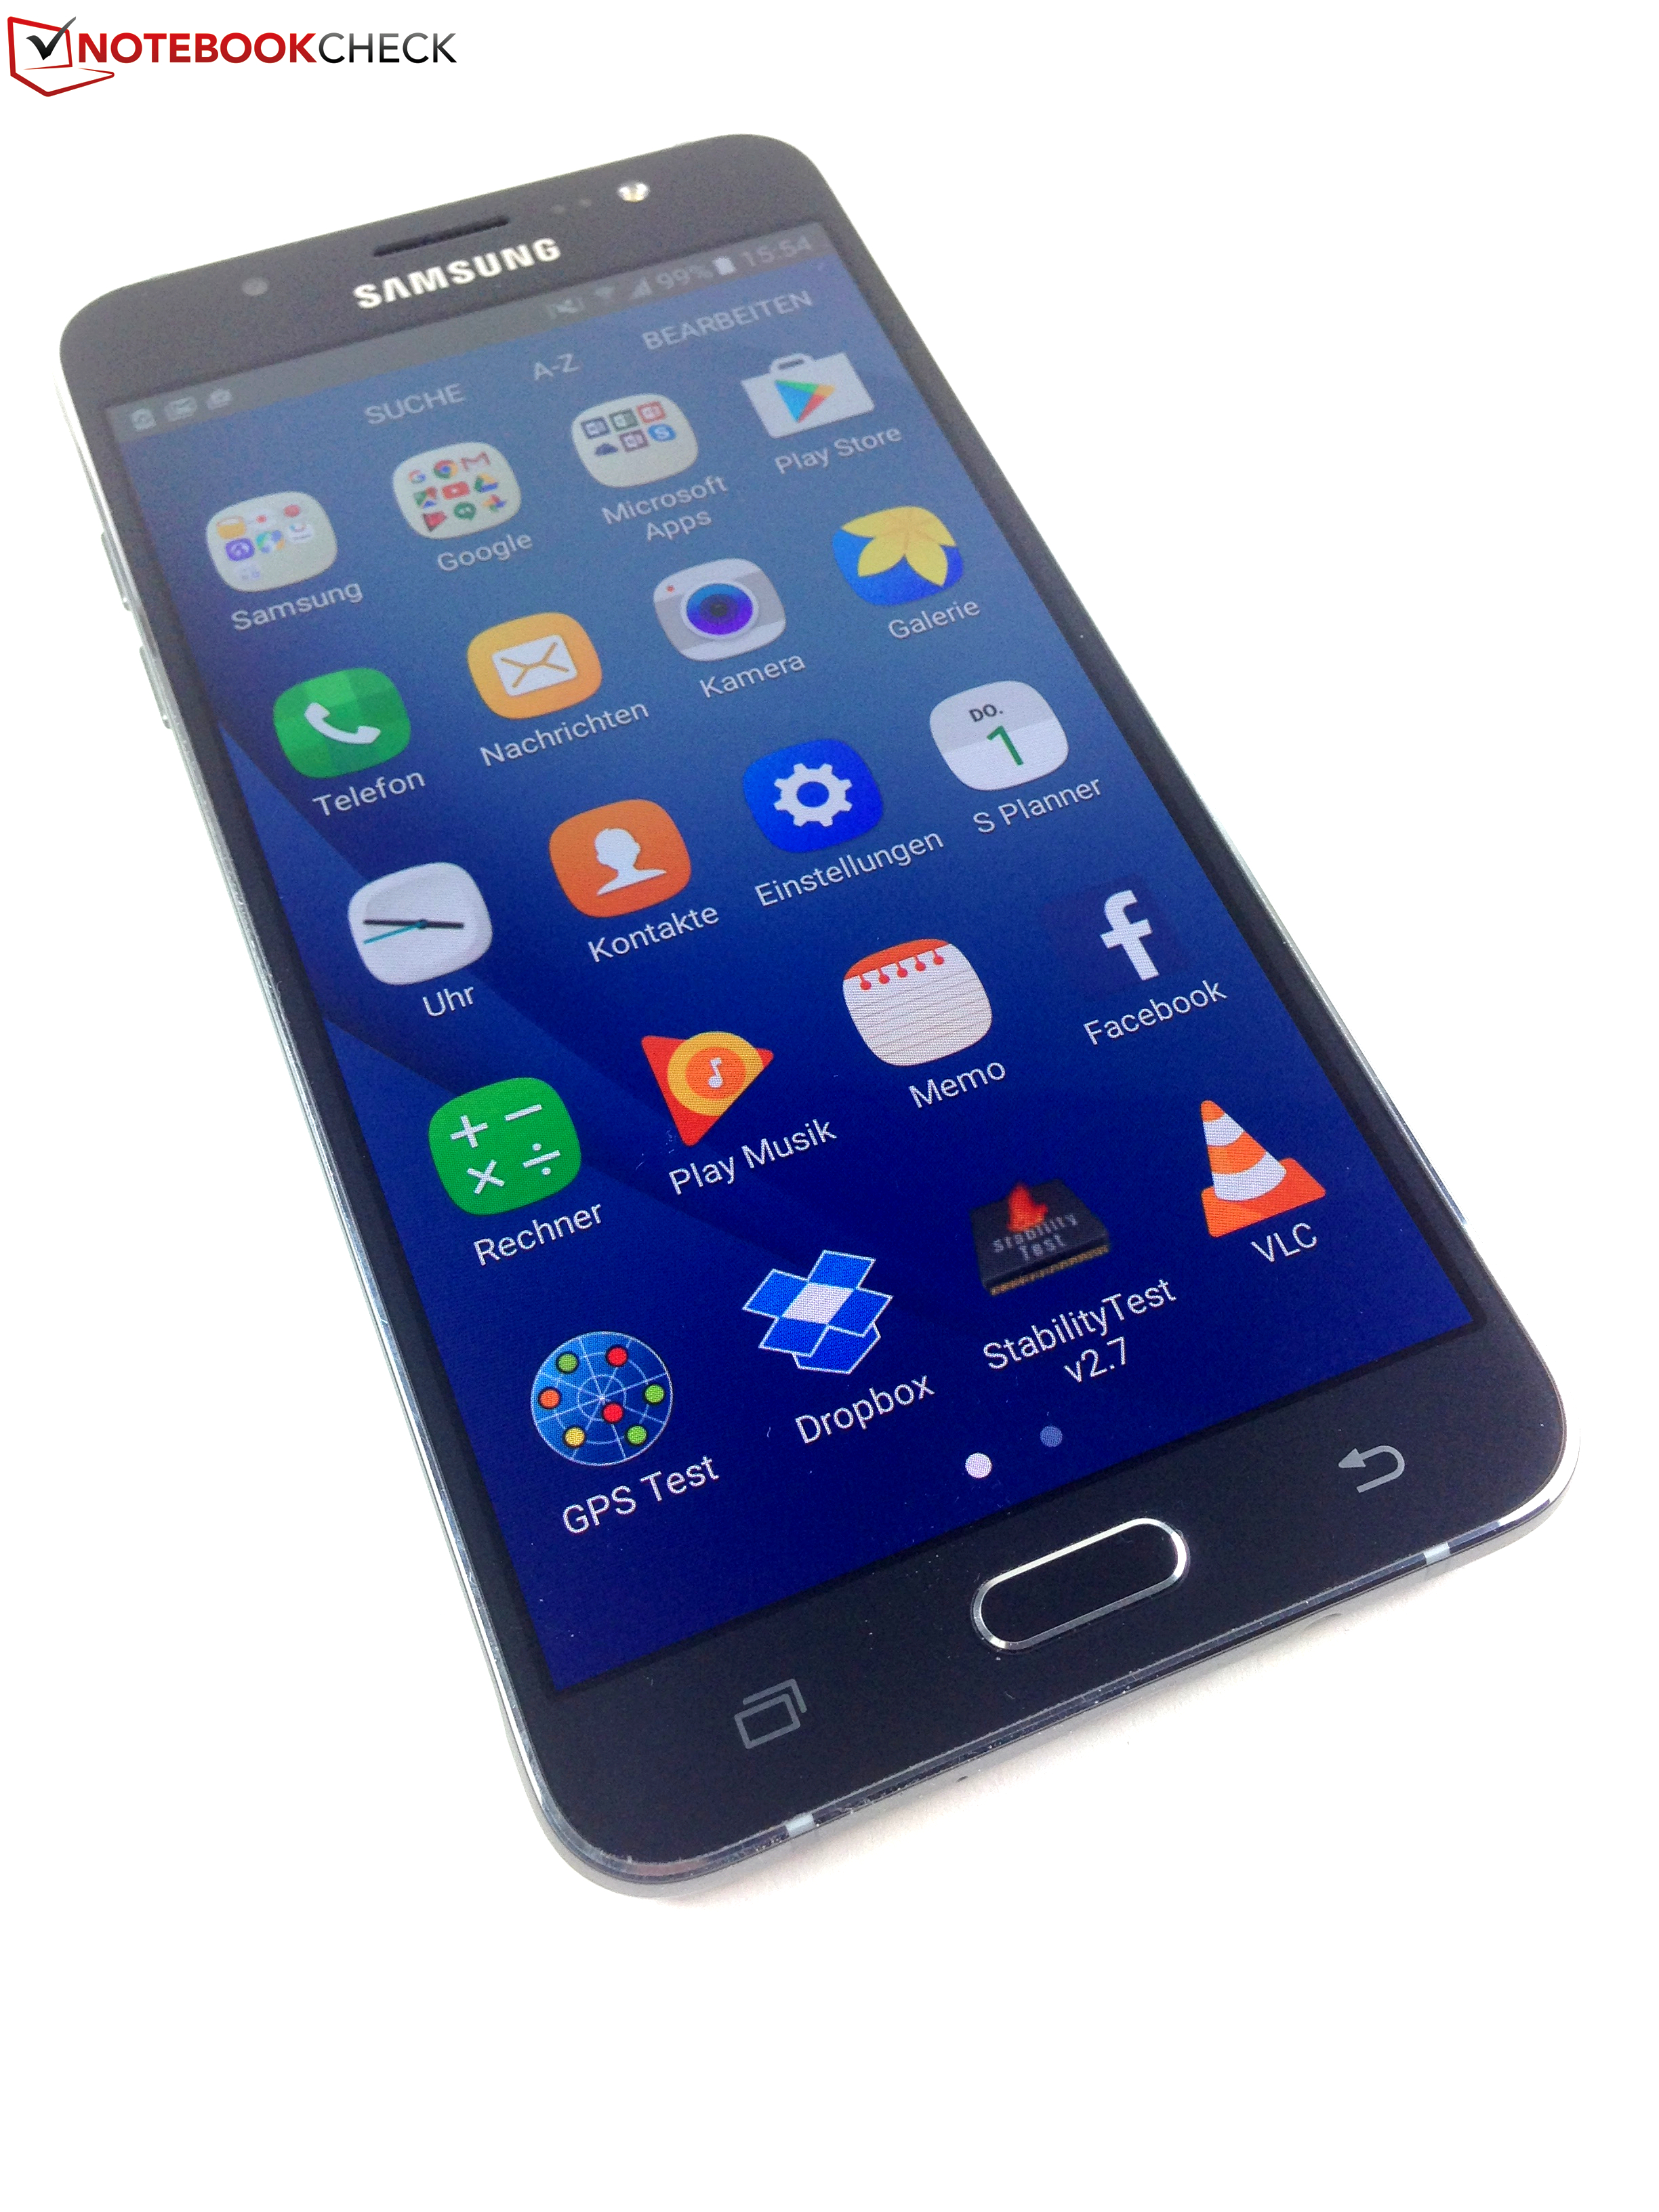 Samsung Galaxy J7 2016 Smartphone Review NotebookChecknet Reviews